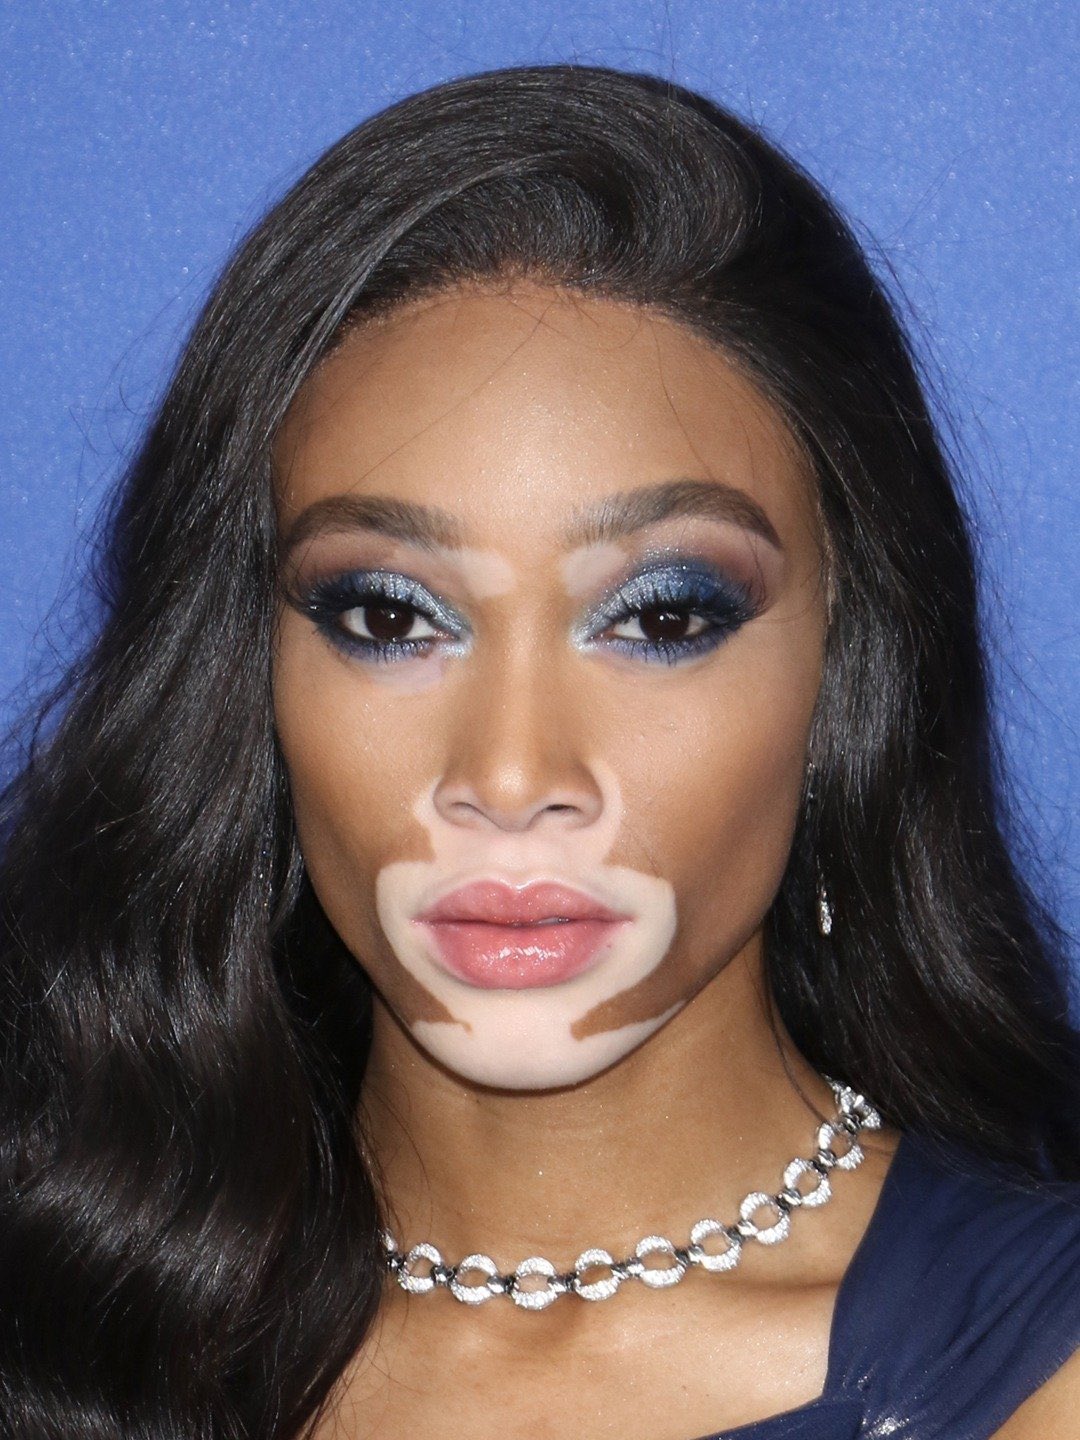 How to Wear Makeup With Vitiligo According to Influencer Lauren